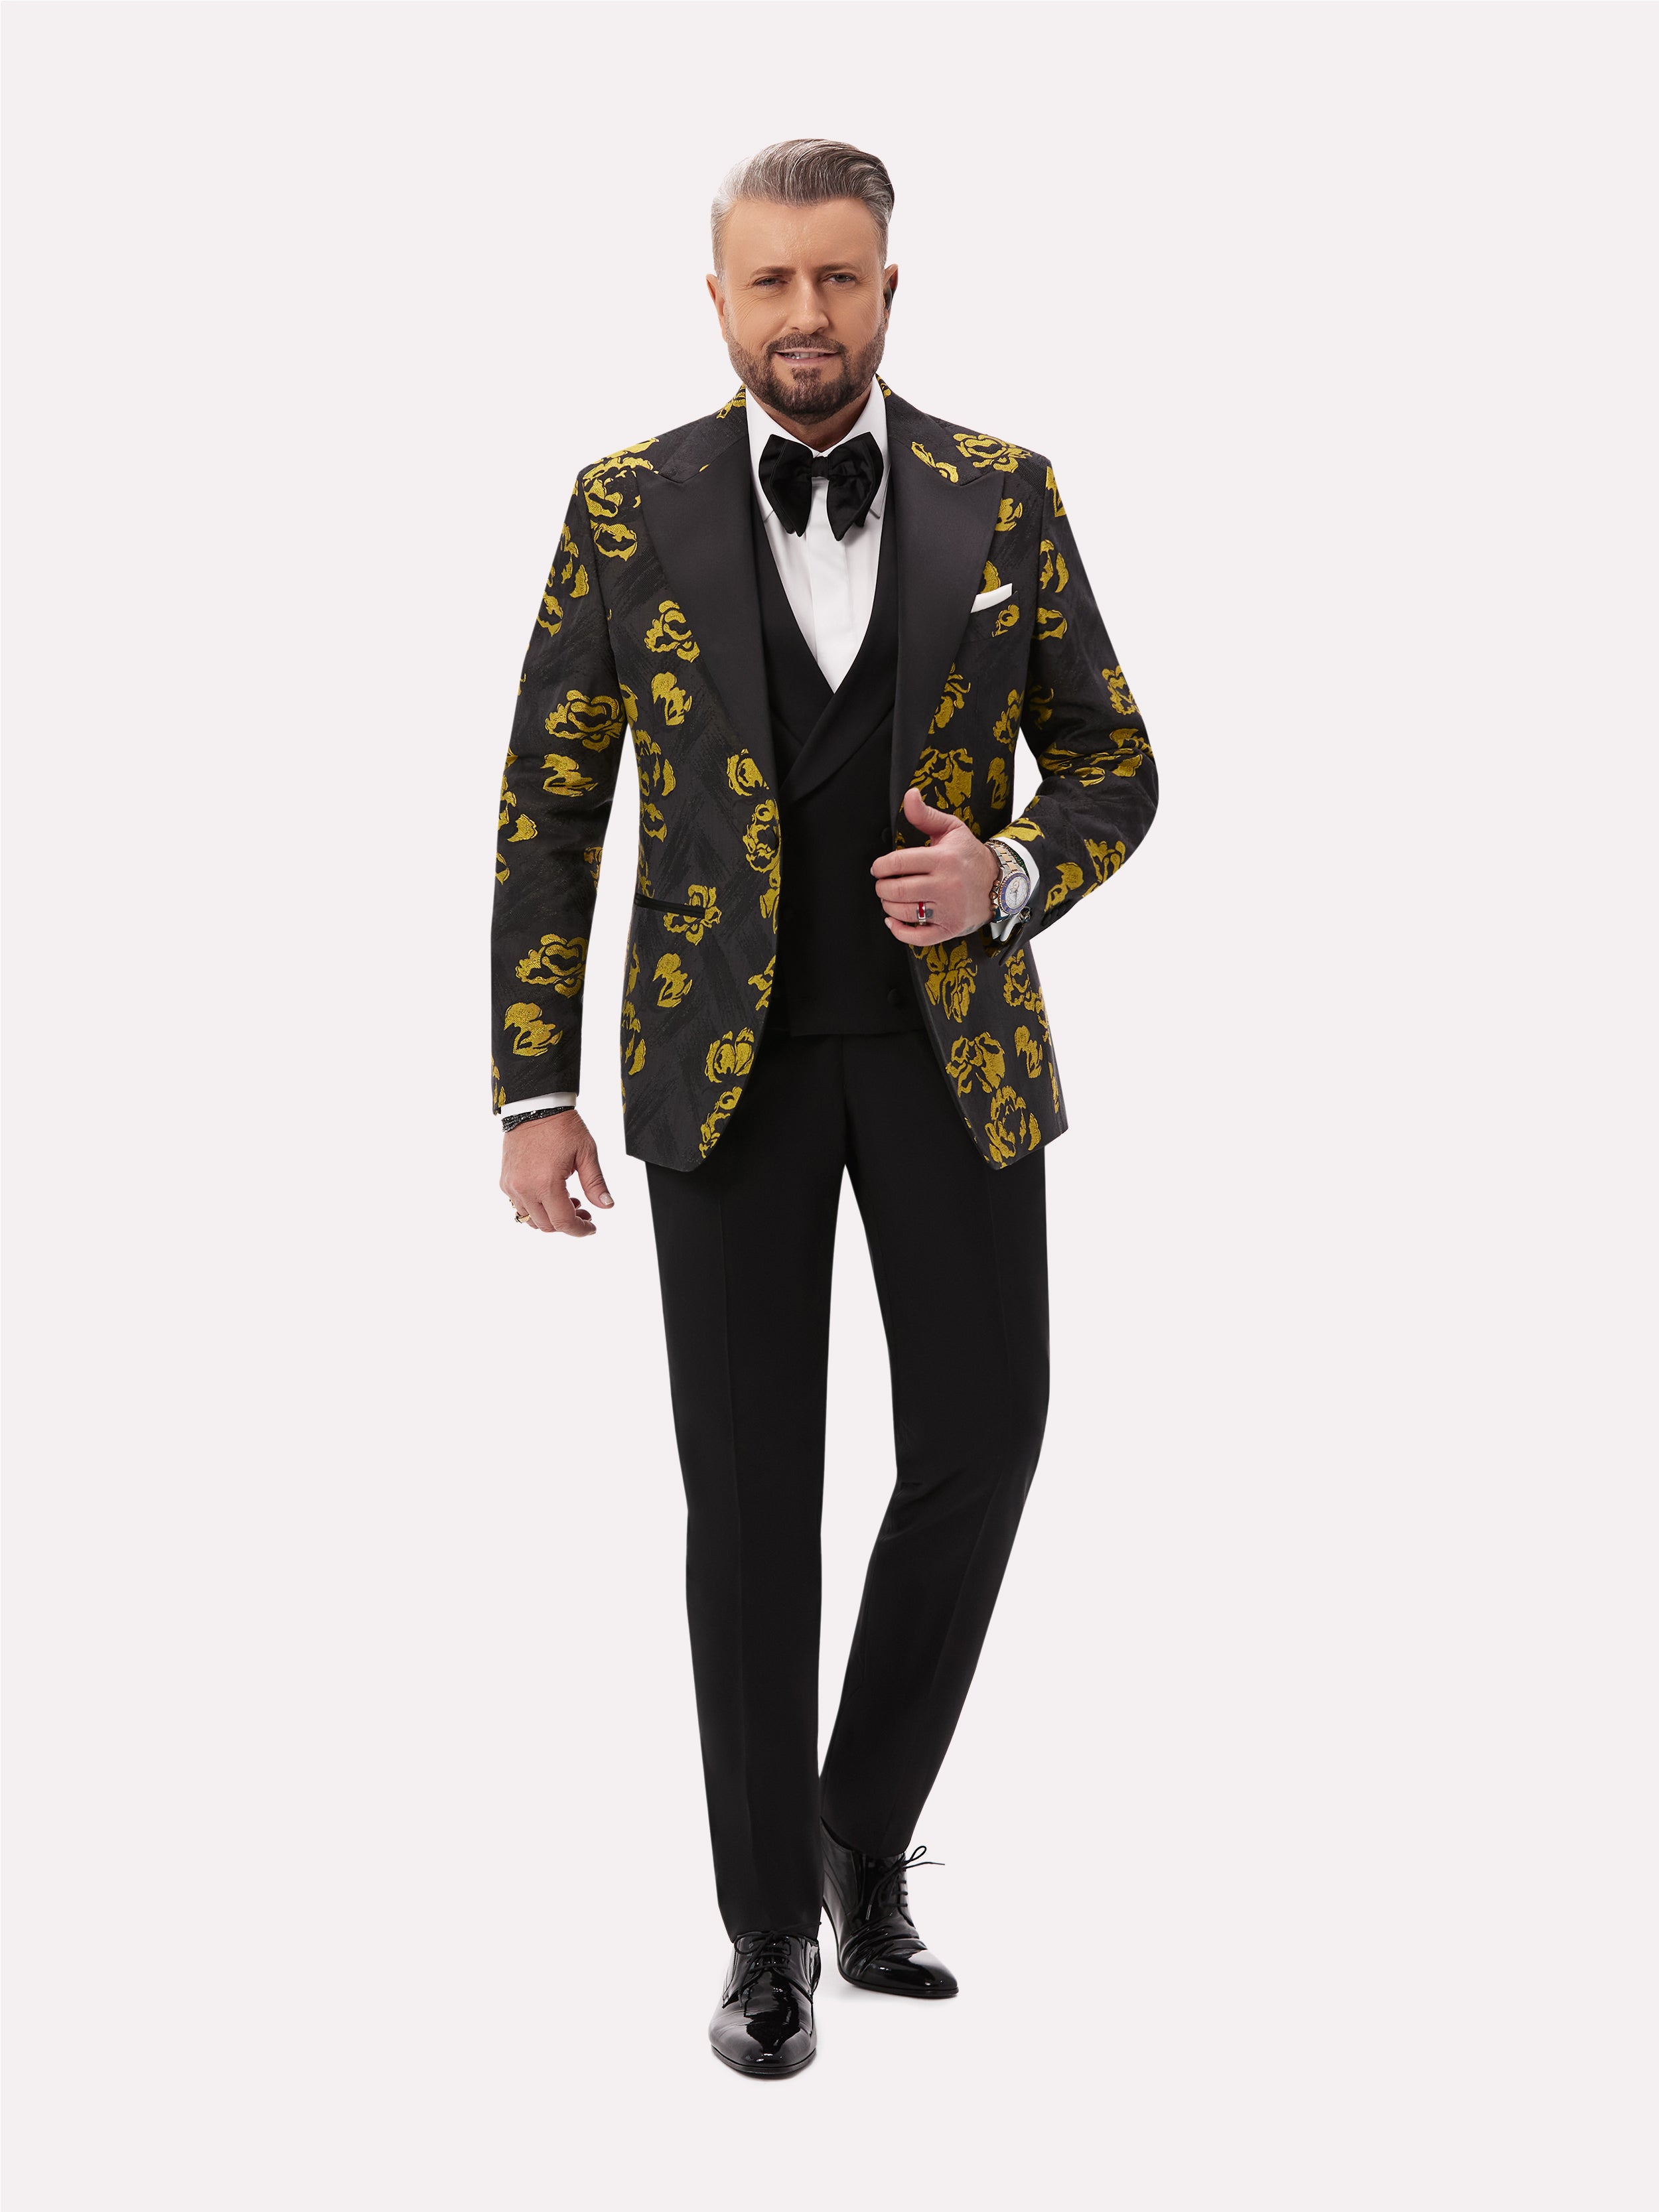 Black tuxedo jacket with golden floral pattern